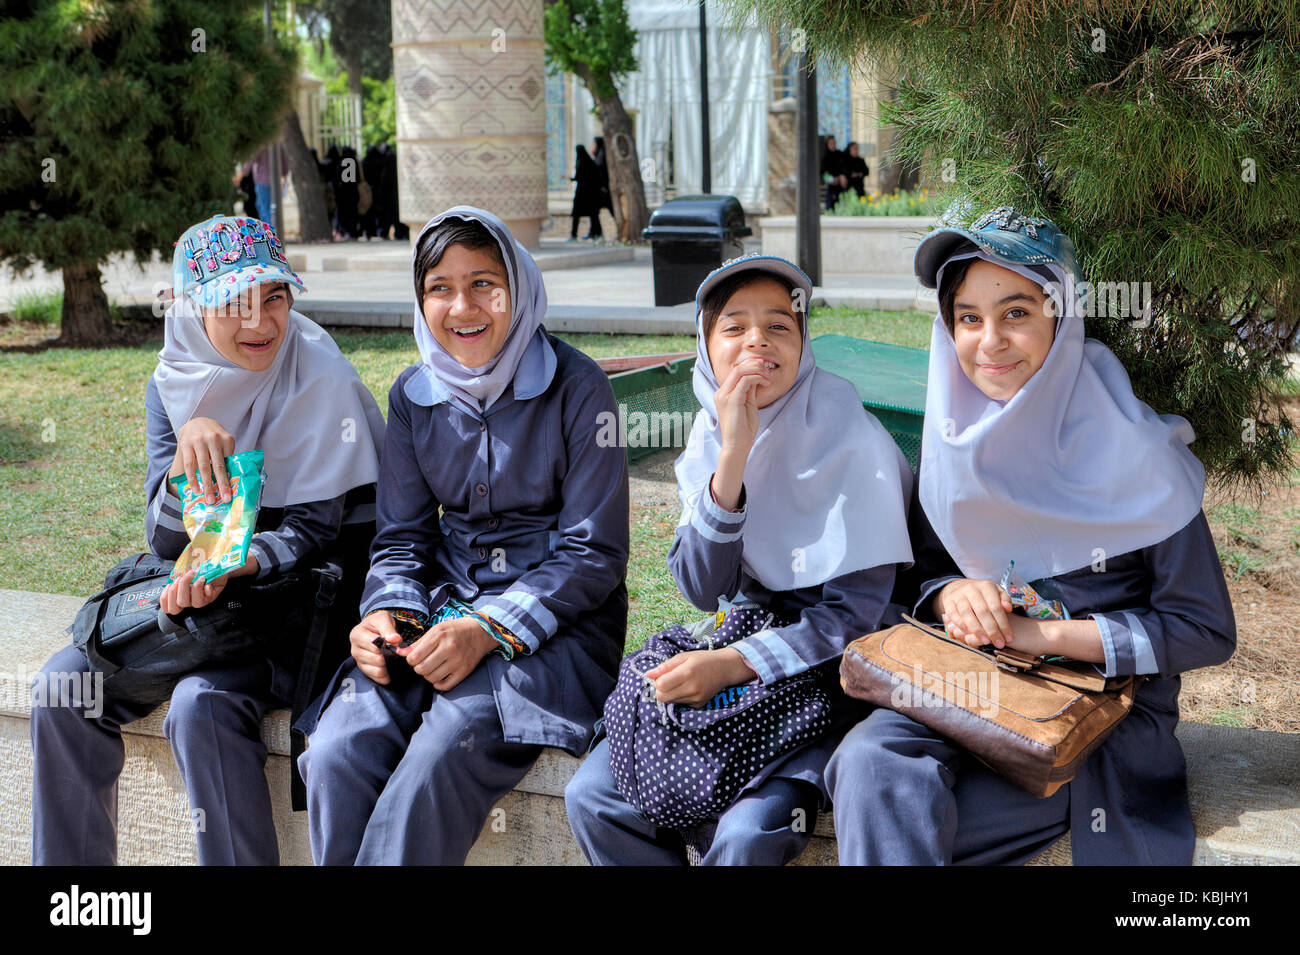 Fars Province, Shiraz, Iran - 19 april, 2017: Iranian school girls in an  Islamic school uniform are resting in the city park Stock Photo - Alamy